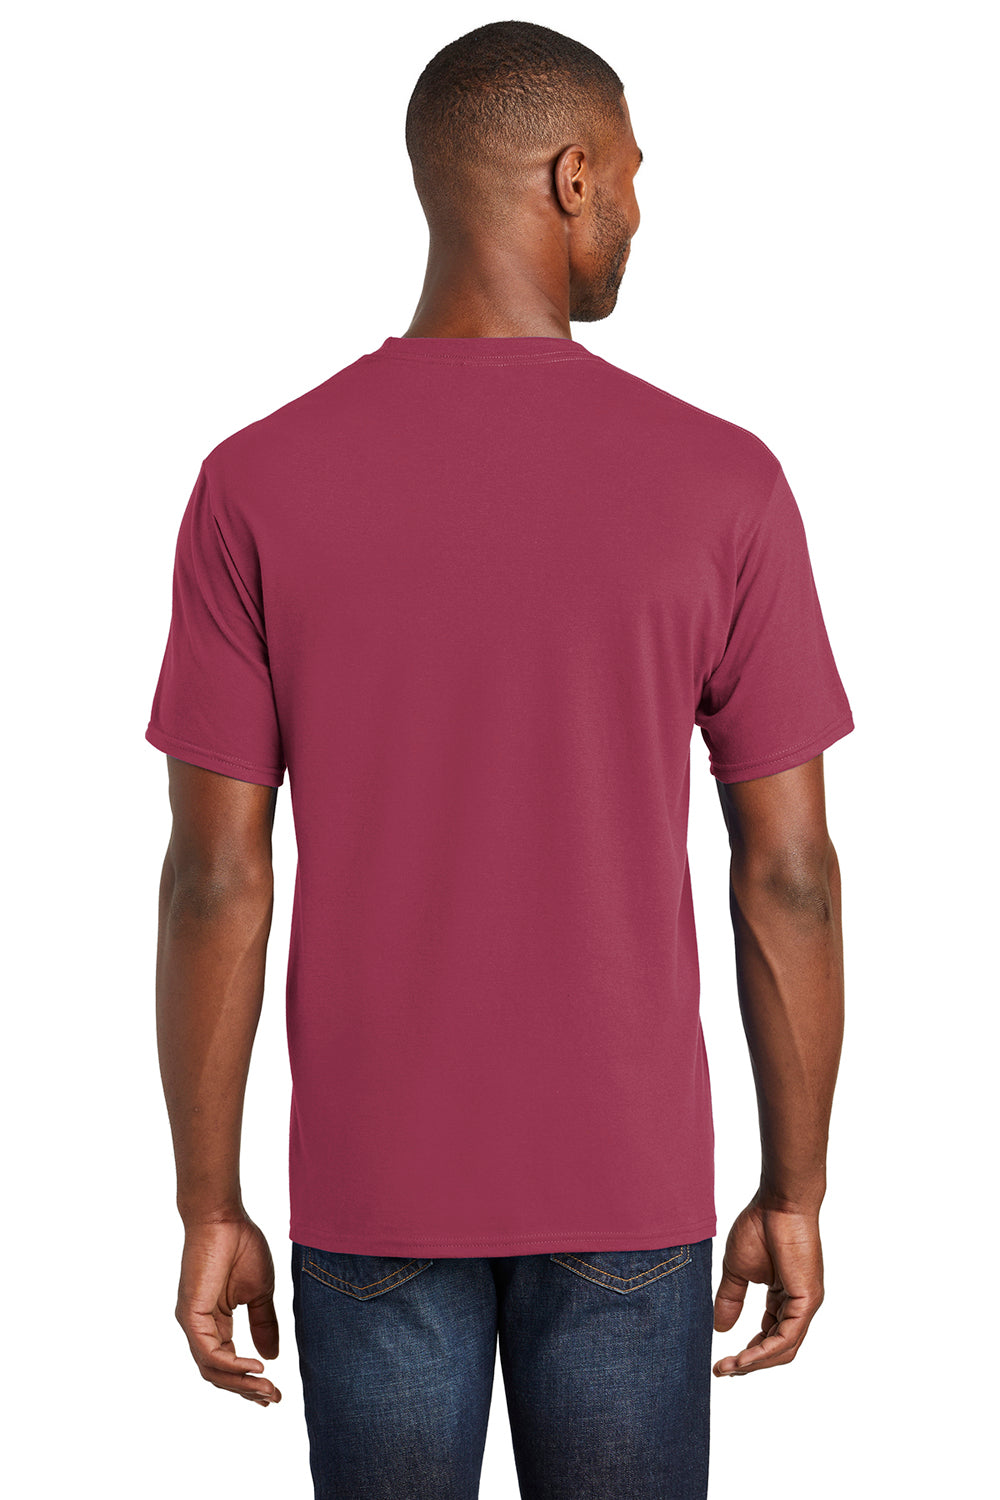 Port & Company PC450 Mens Fan Favorite Short Sleeve Crewneck T-Shirt Garnet Red Back